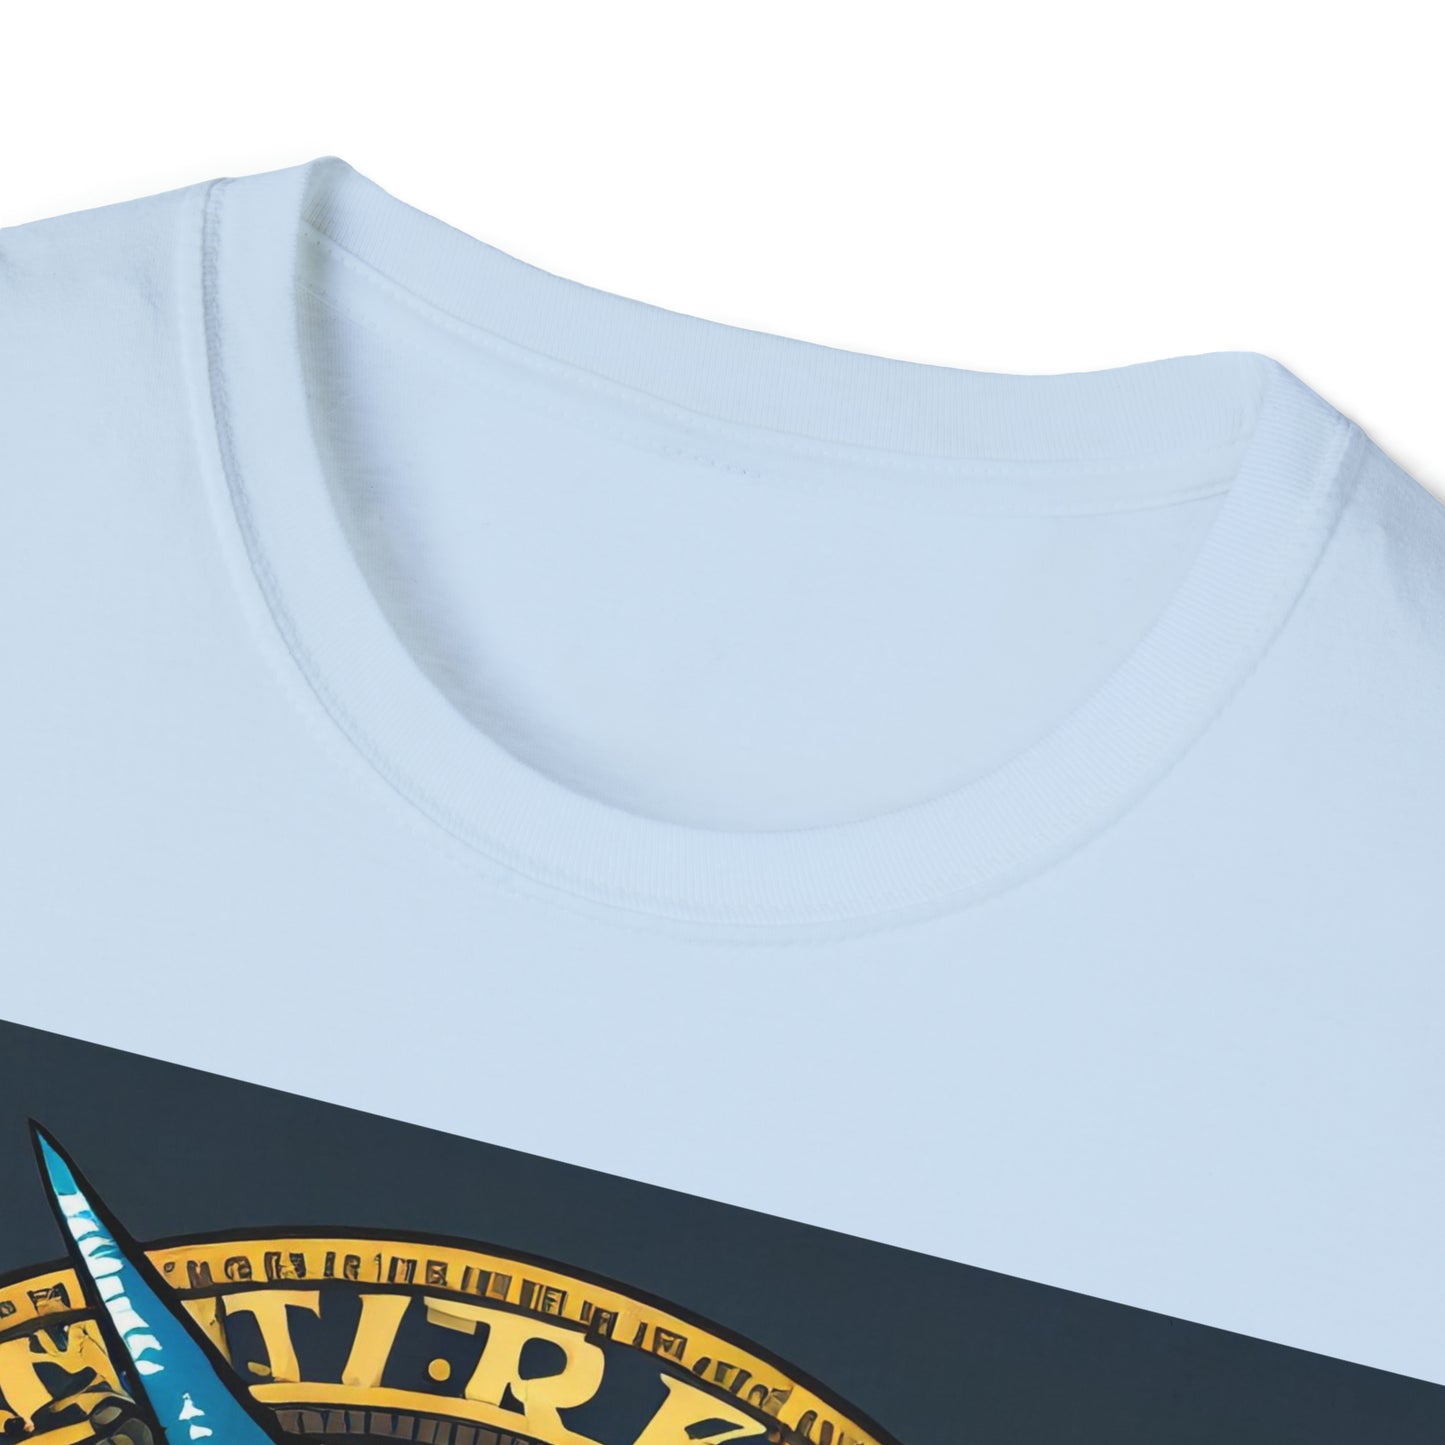 Adult Softstyle T-Shirt Steam Punk Avian Gematria Road Runner Blue